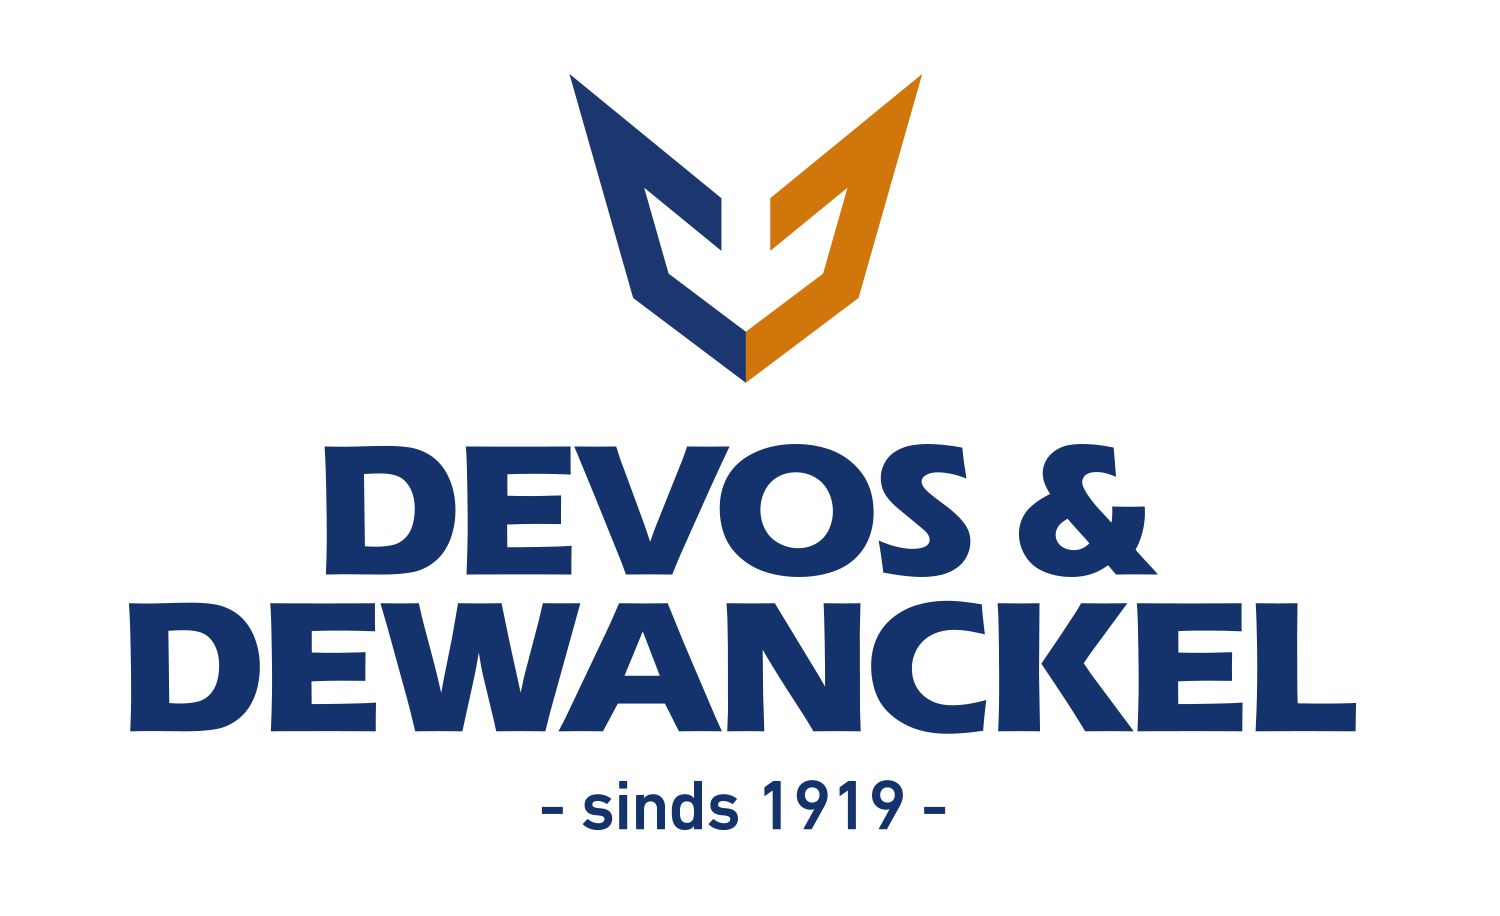 logo Devos & Dewanckel NV